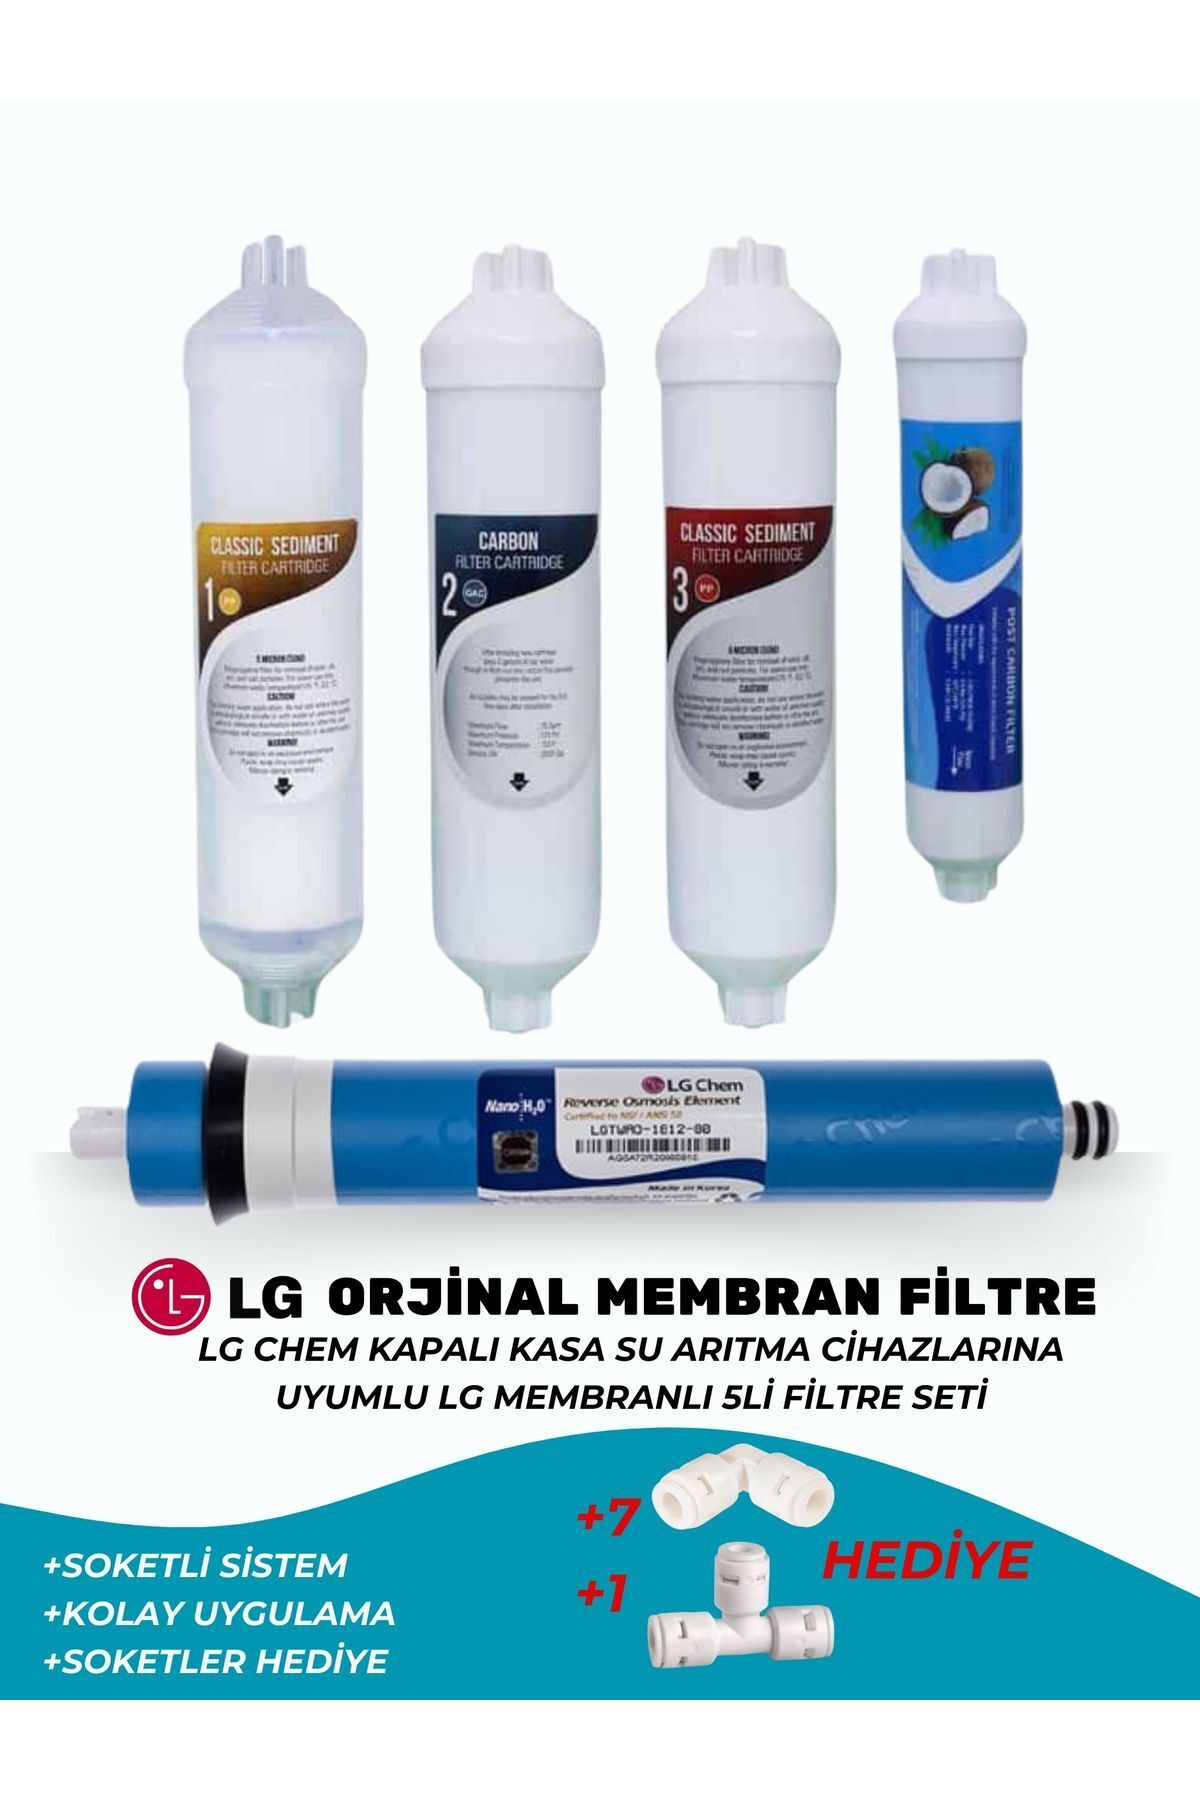 LG Chem Full Lg Filtre Seti Soket Hediyeli Kapalı Kasa Su Arıtma Cihazlarına Uyumlu 5'li Filtre Seti